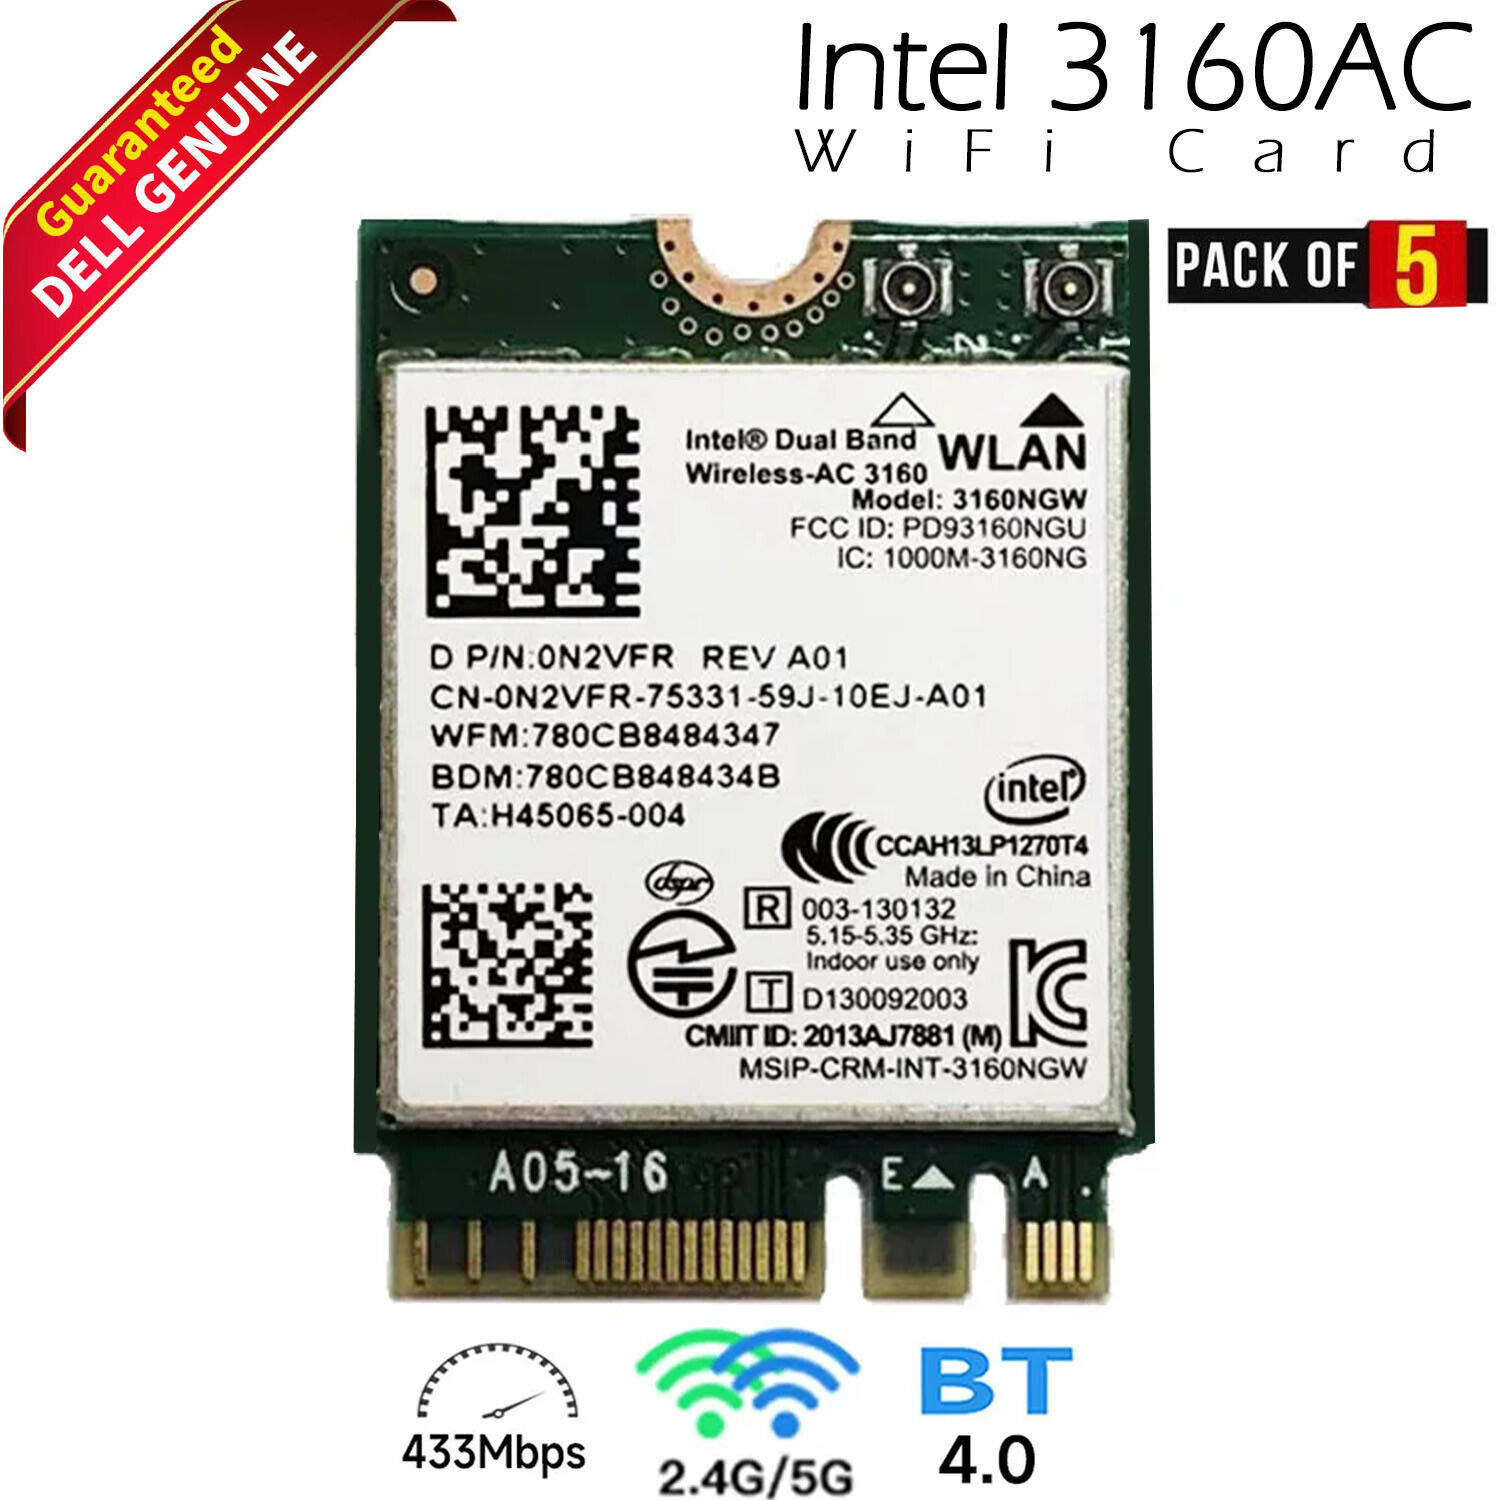 Lot X 5 Dell Intel Wireless-AC 3160 Dual Band WLAN WiFi Bluetooth M.2 Card N2VFR